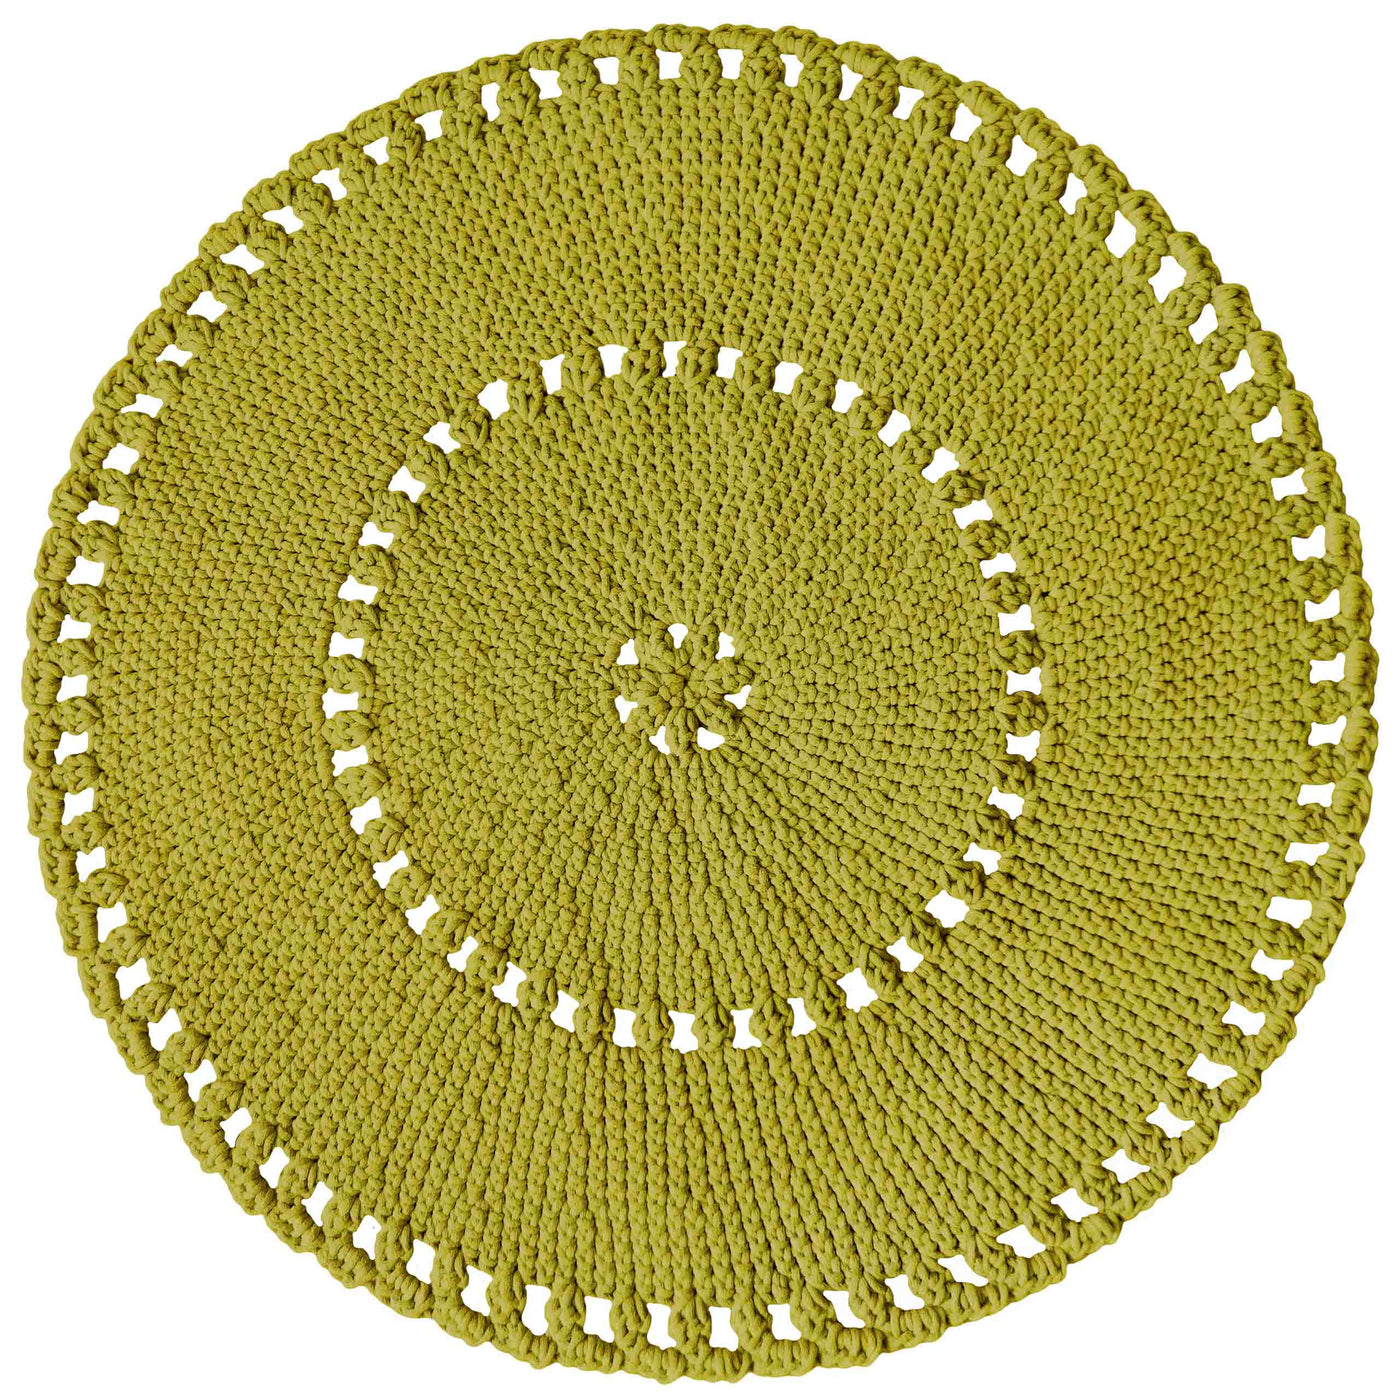 Crochet Boho Rug | Golden Kiwi-vendor-unknown-Yes Bebe